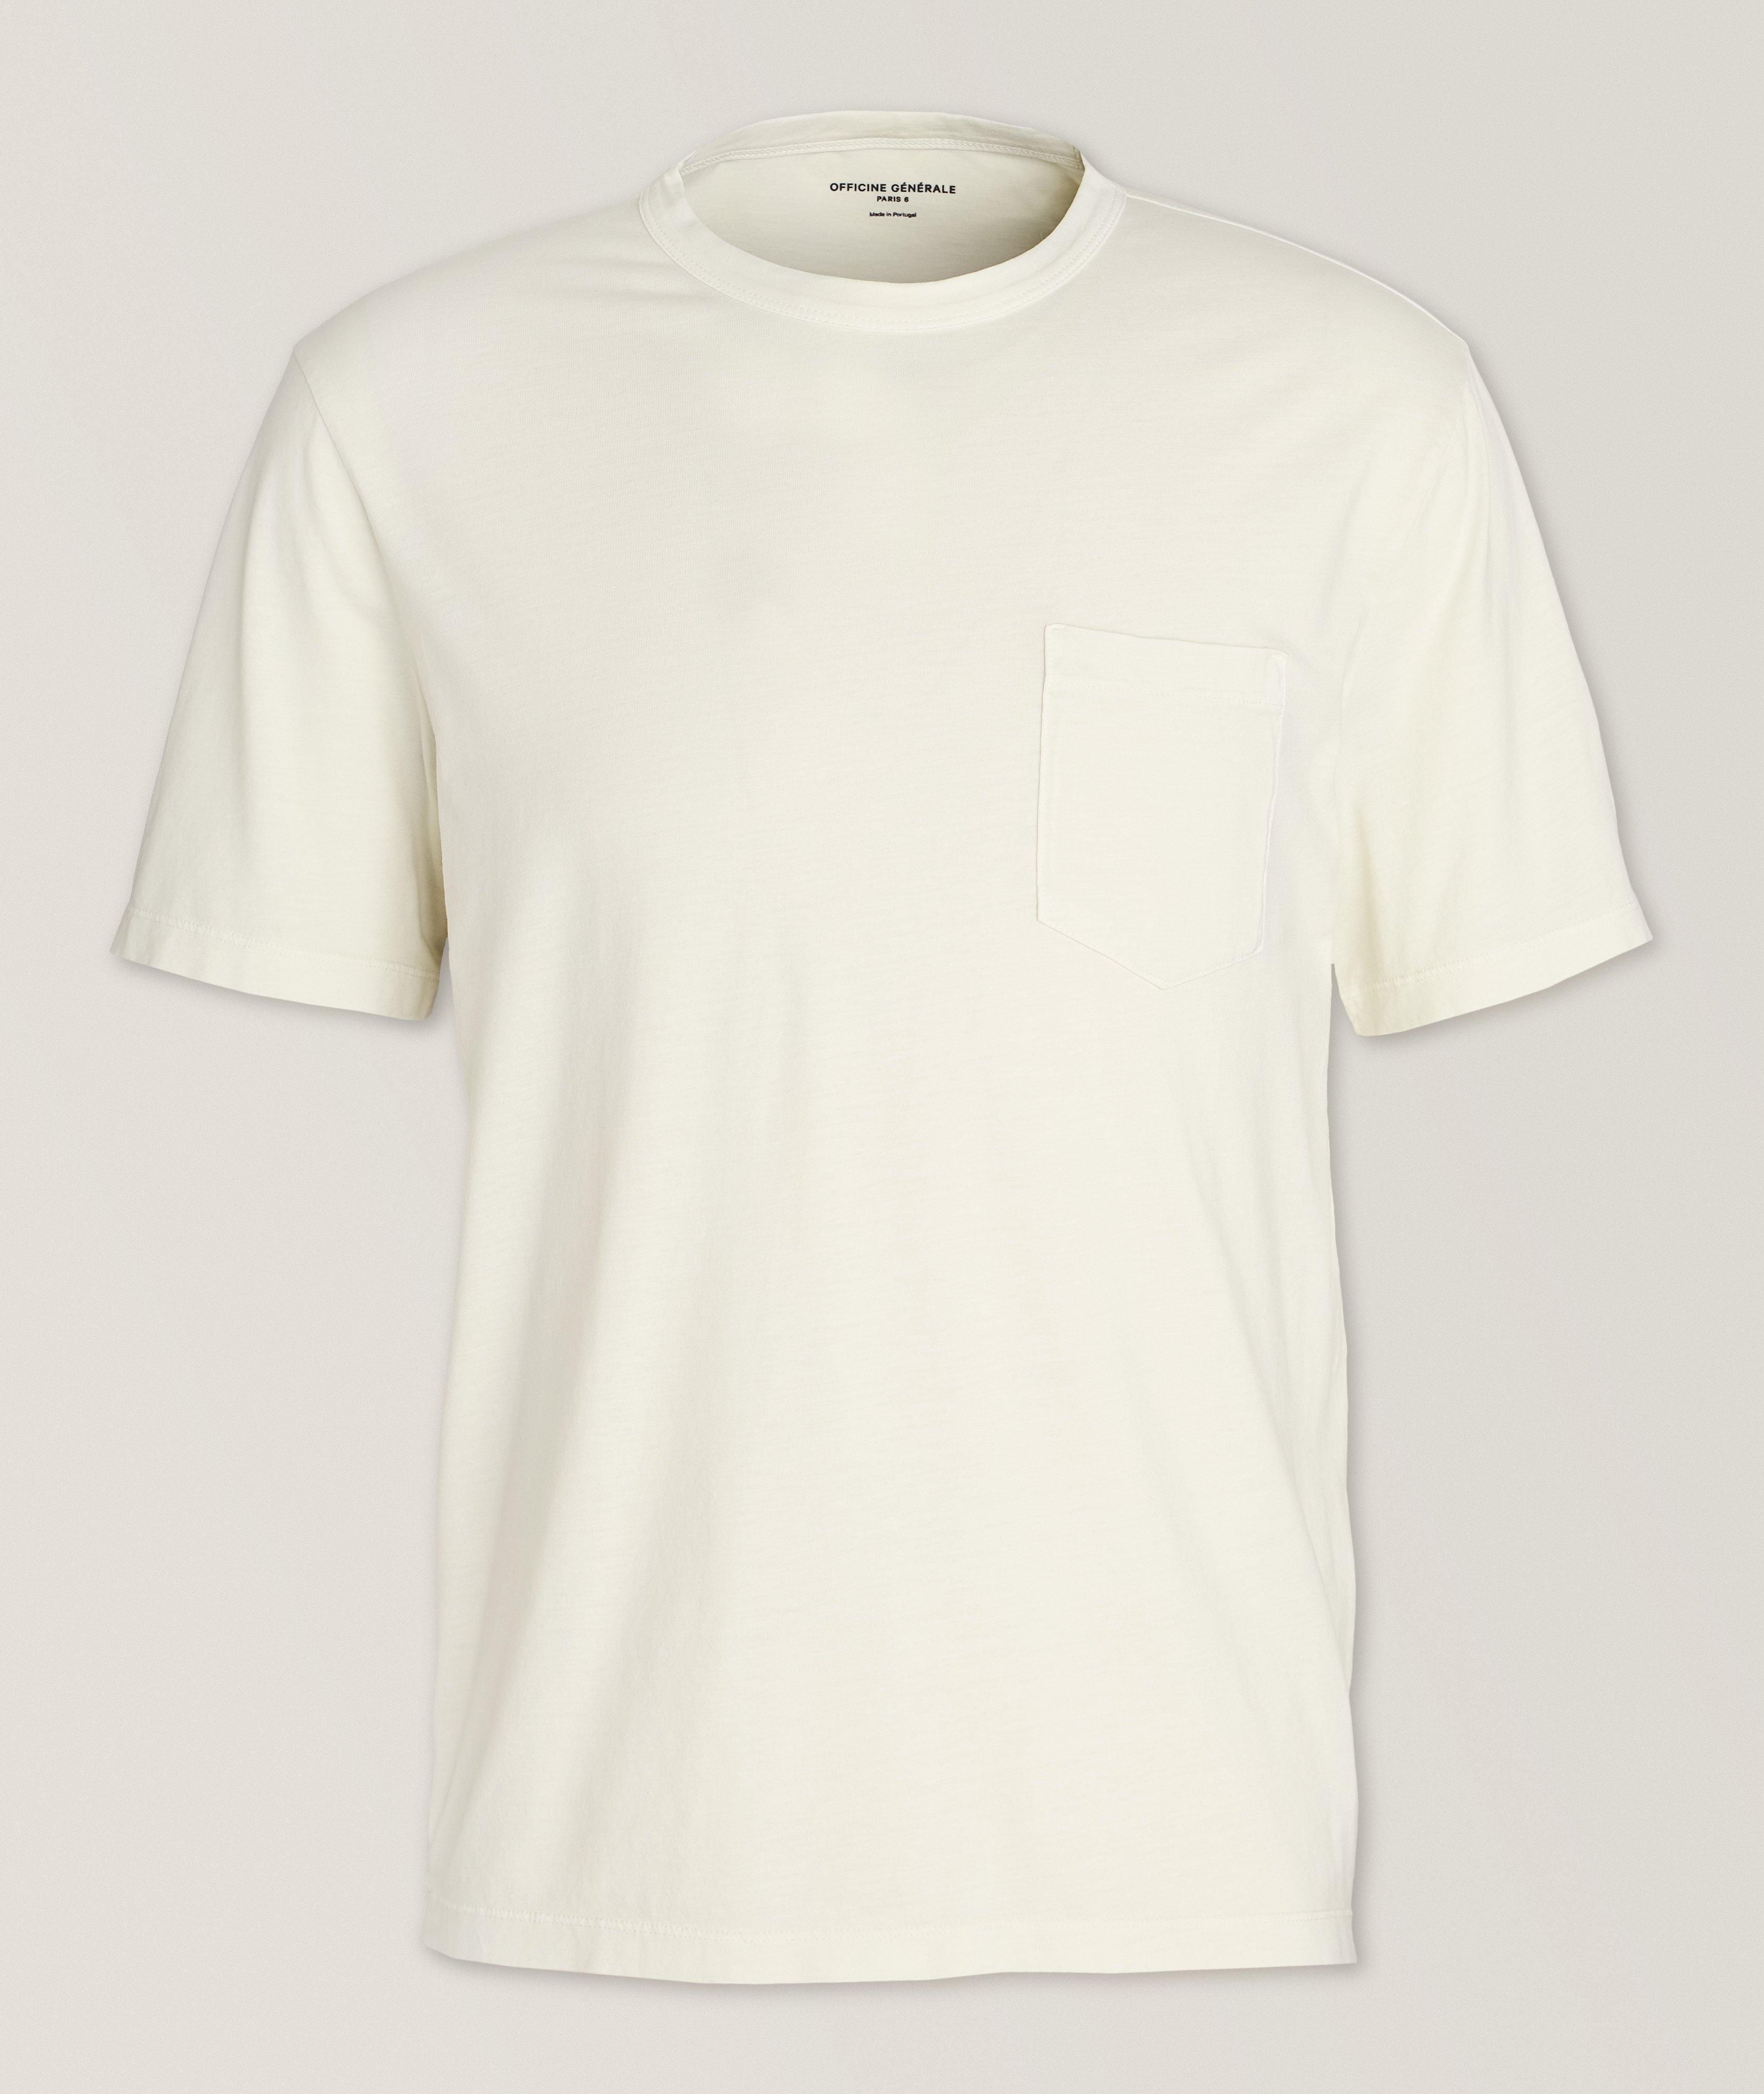 Heathered Lyocell-Cotton T-Shirt  image 0